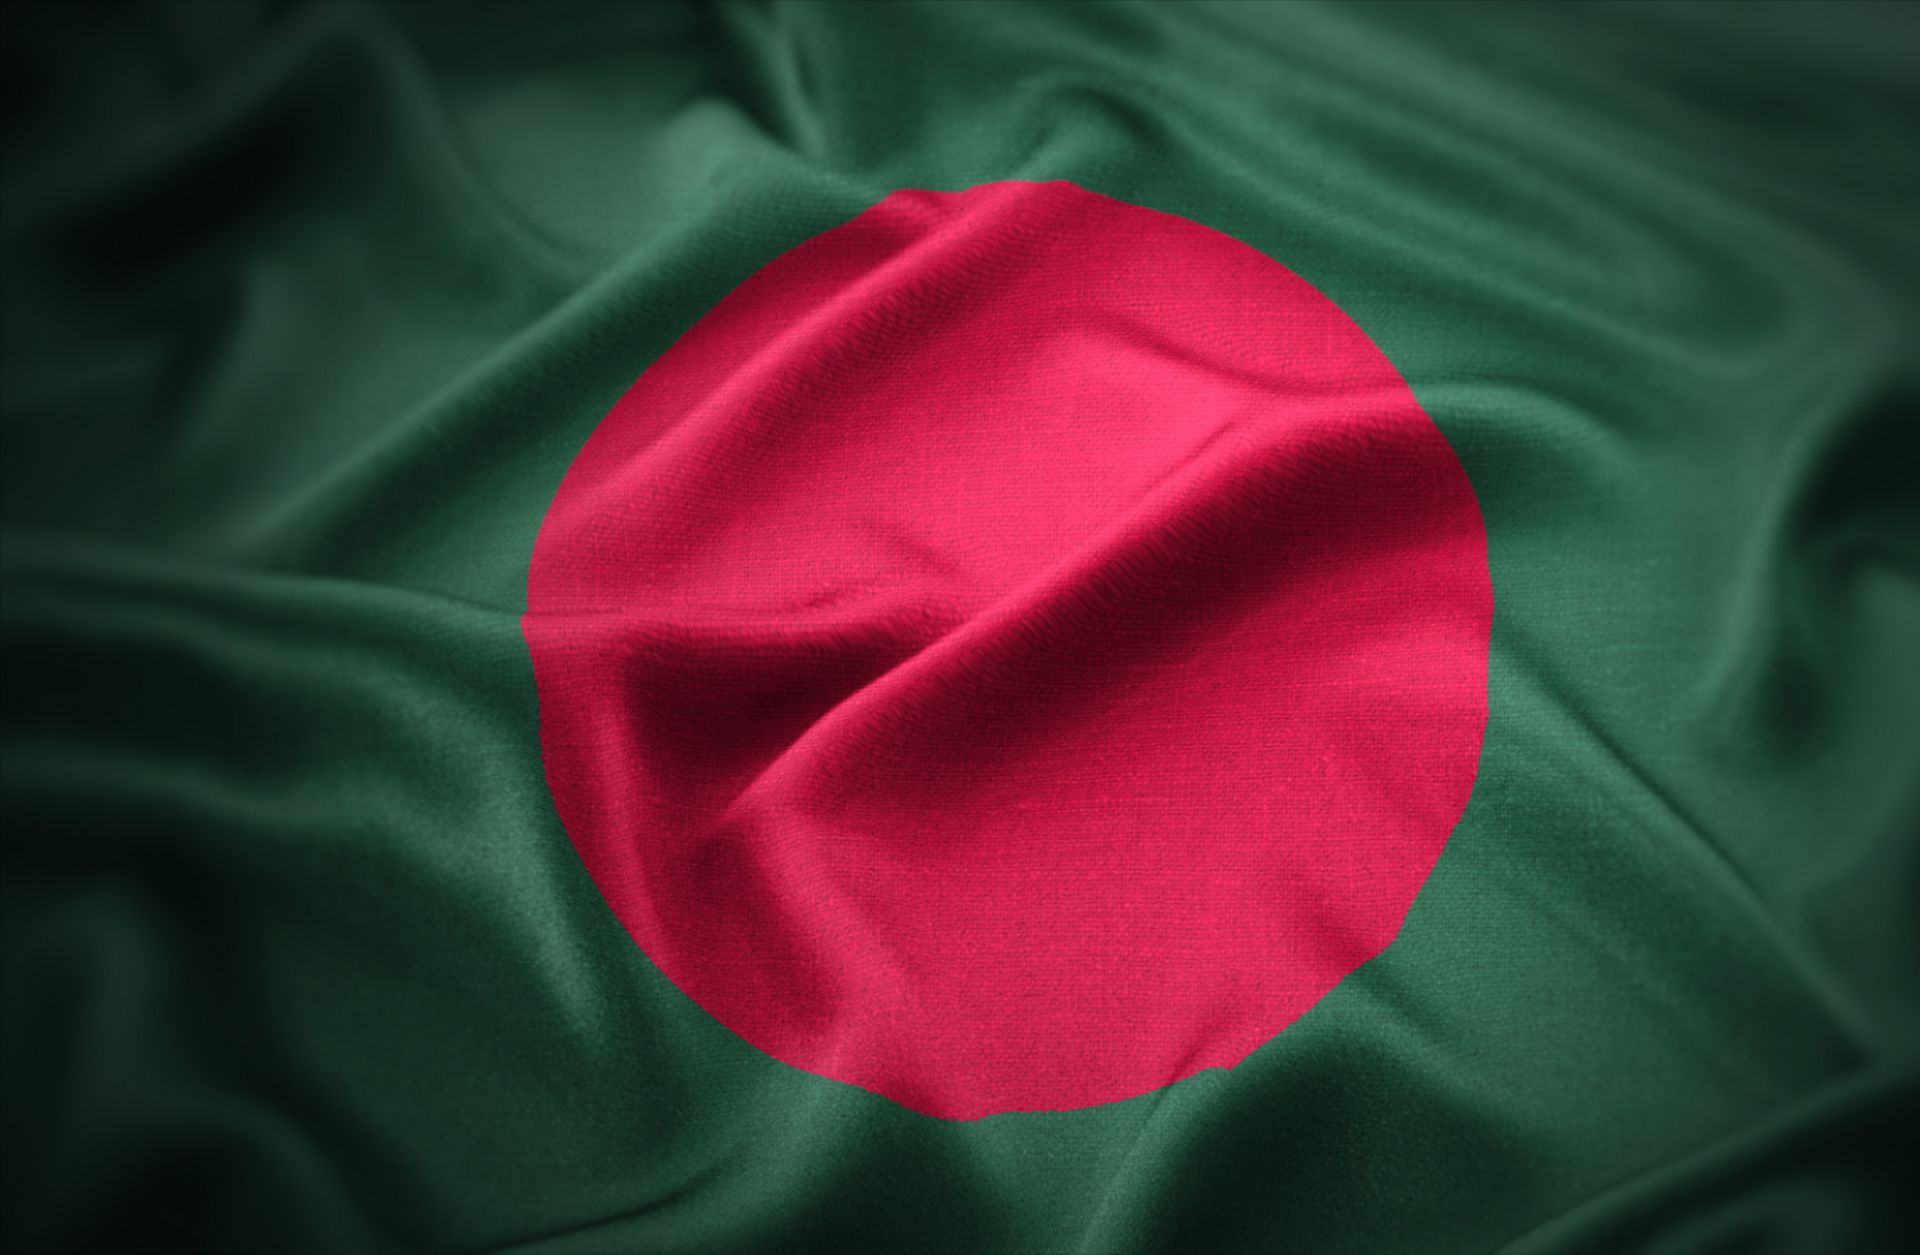 A digital illustration of the Bangladeshi flag.